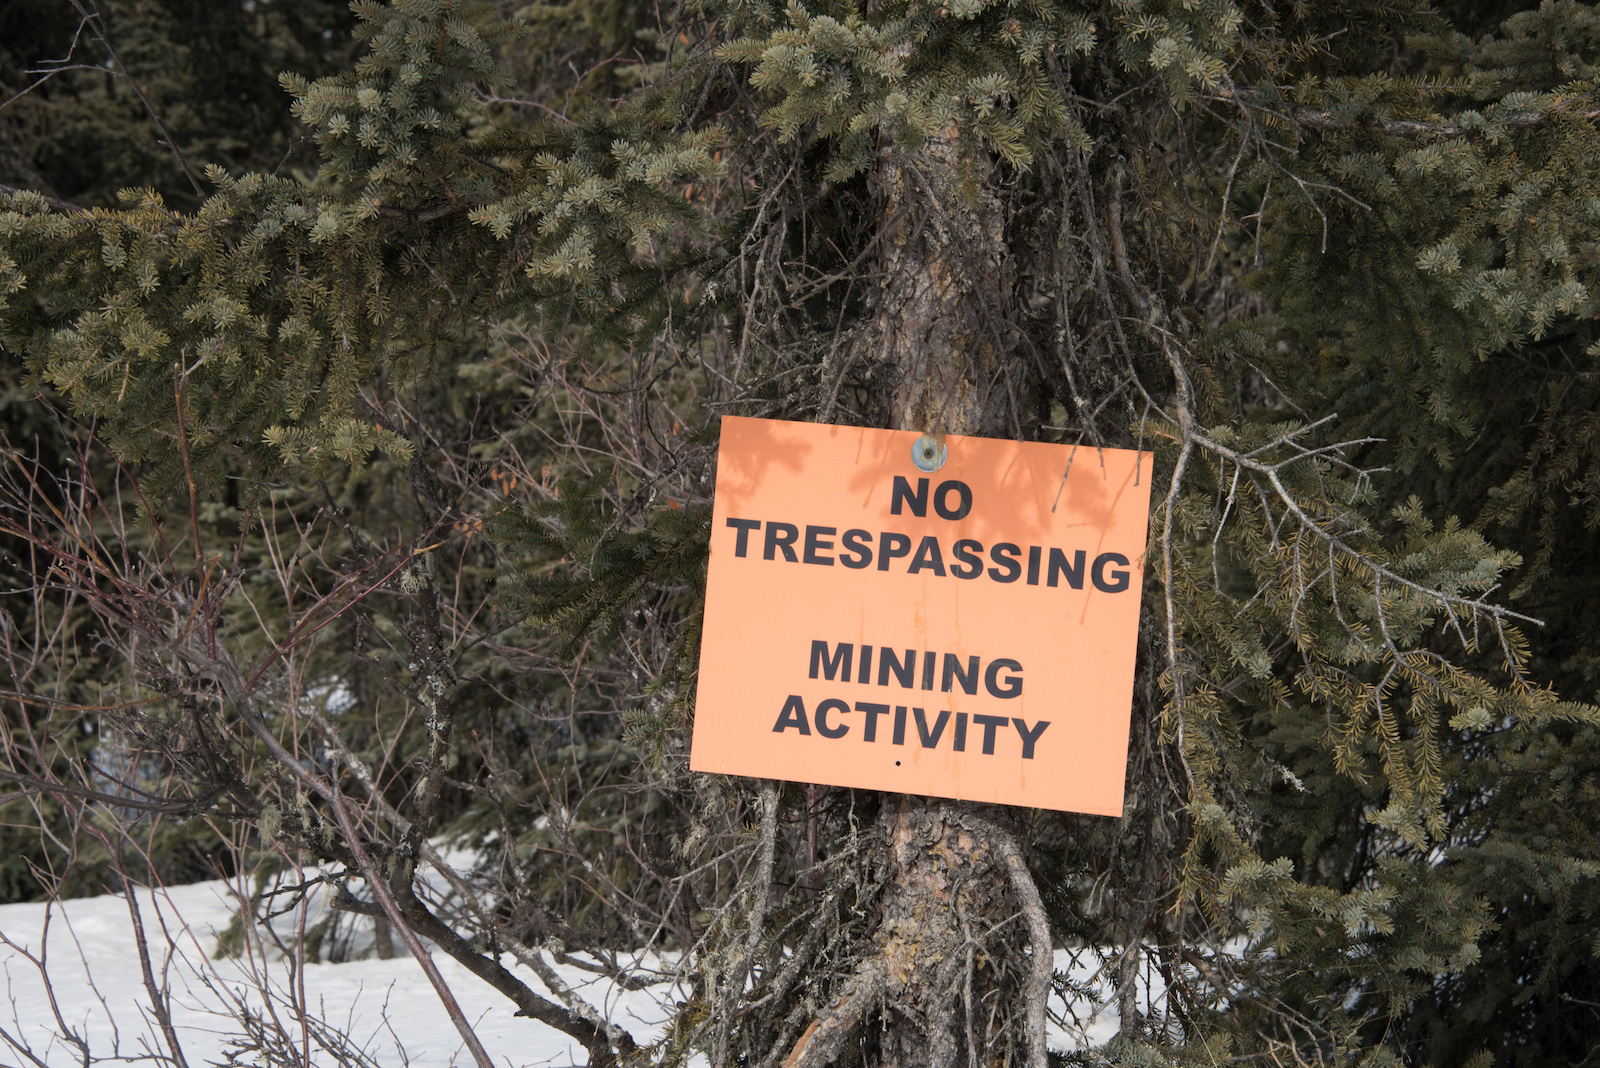 A "No trespassing mining activity sign" on a tree